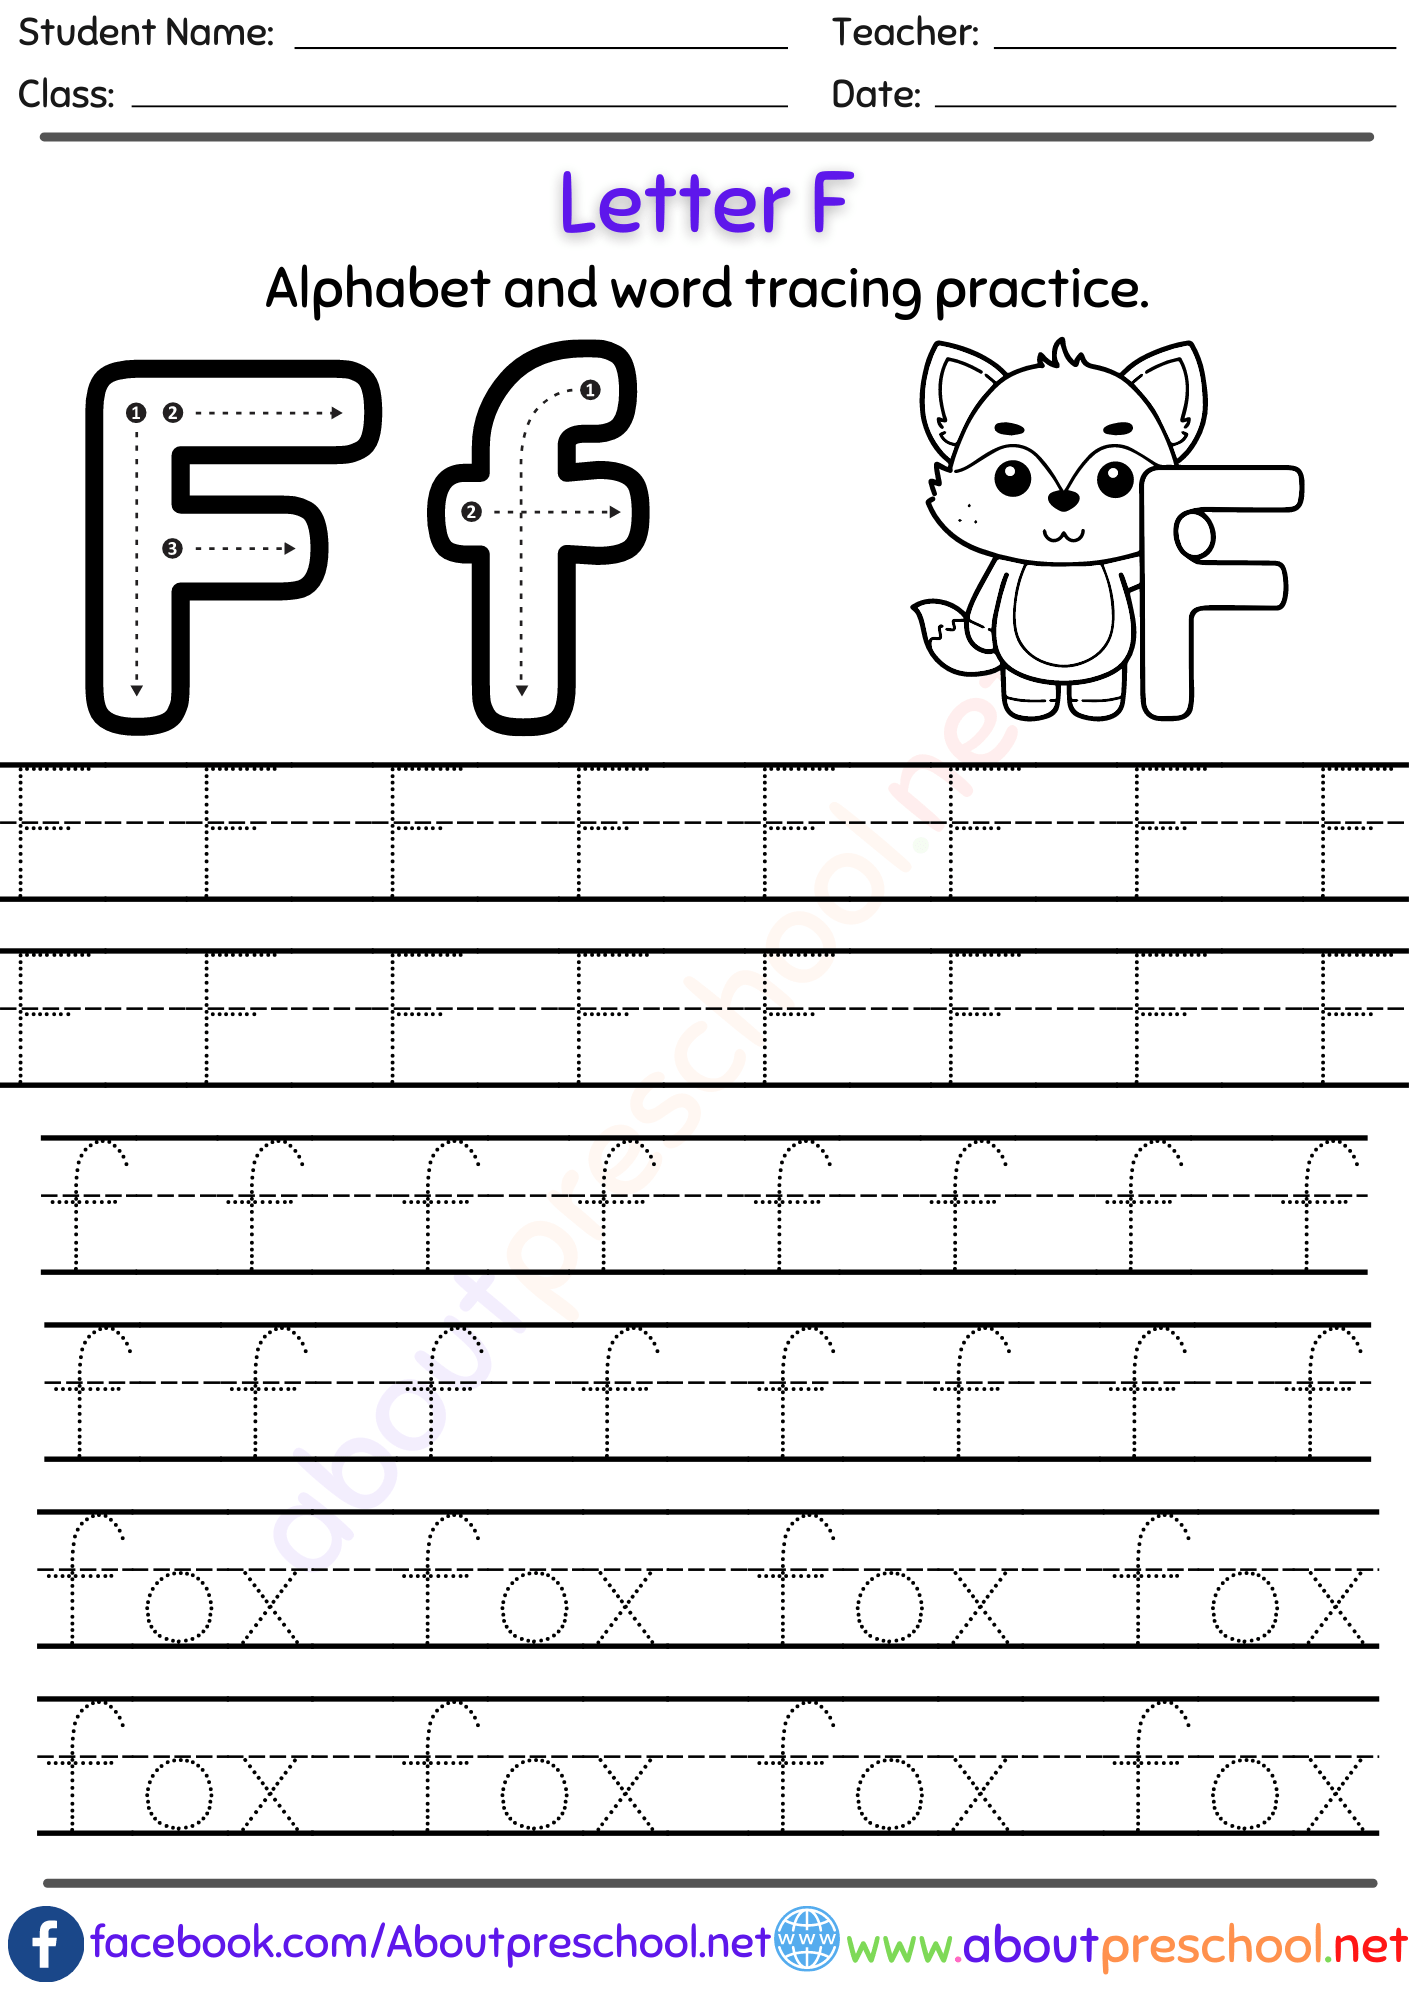 Letter F Alphabet tracing worksheets